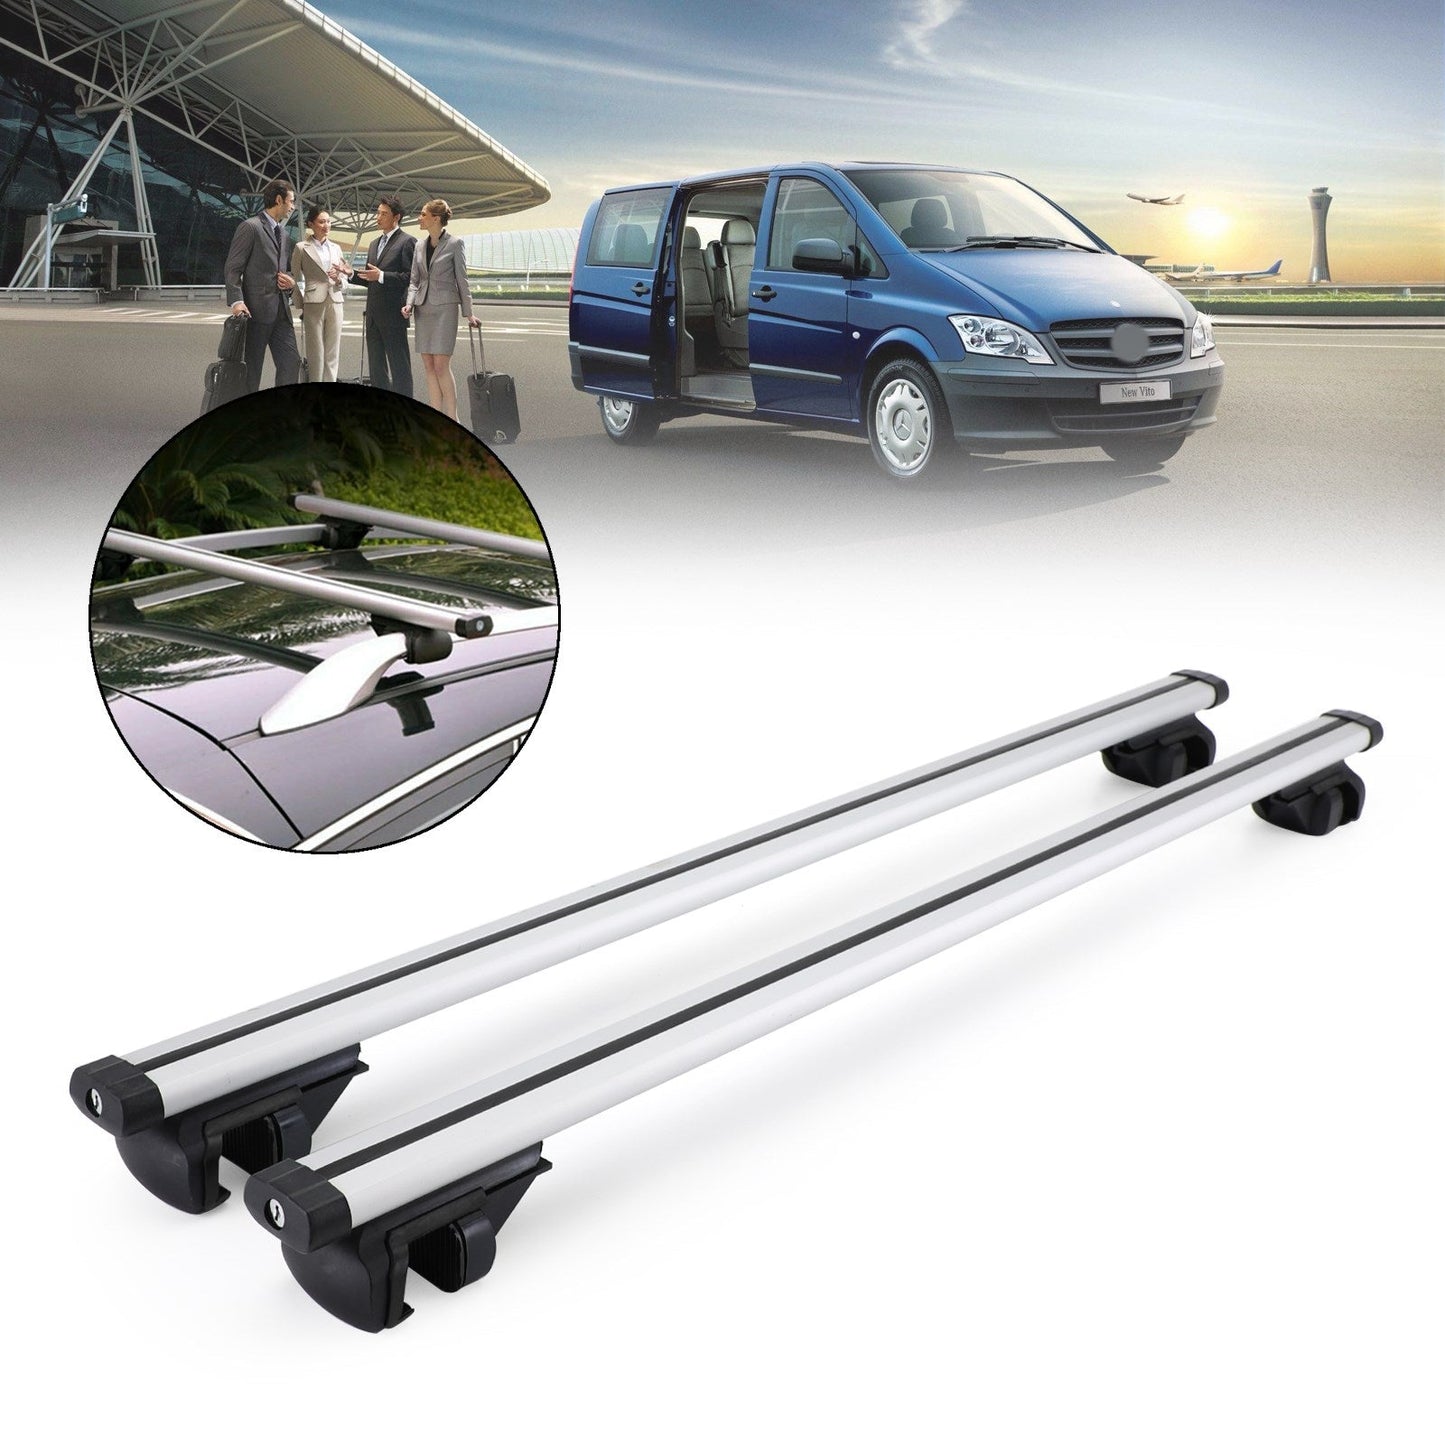 48" Aluminum Car Roof Top Cross Bar Universal Luggage Carrier Rack w/ Lock Key